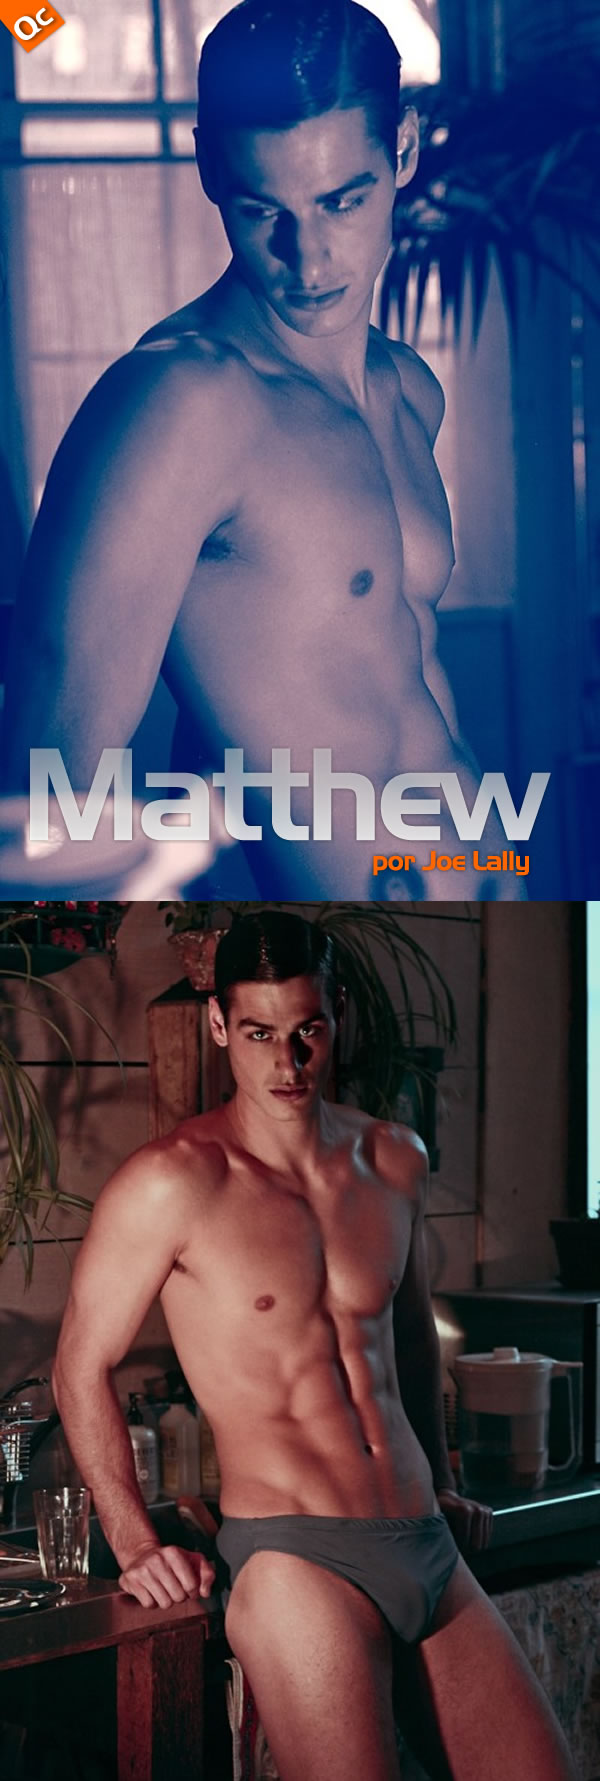 Joe Lally: Matthew Coatsworth